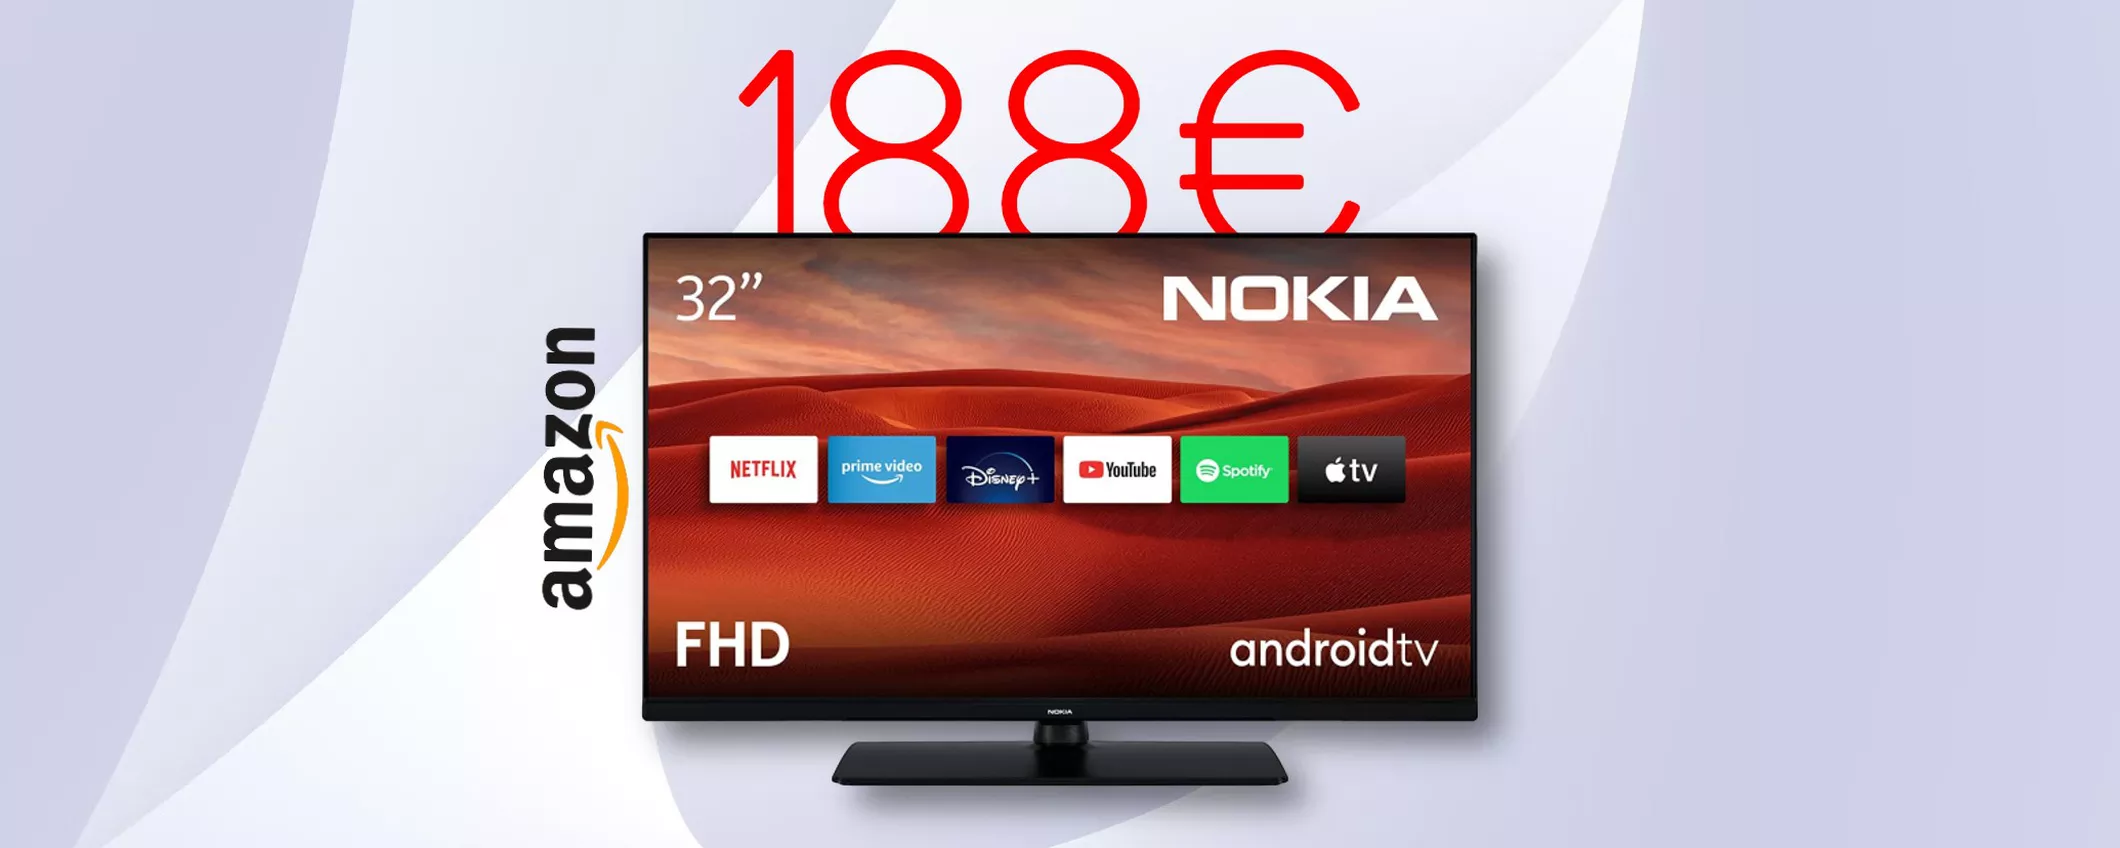 Smart TV Nokia FHD 32